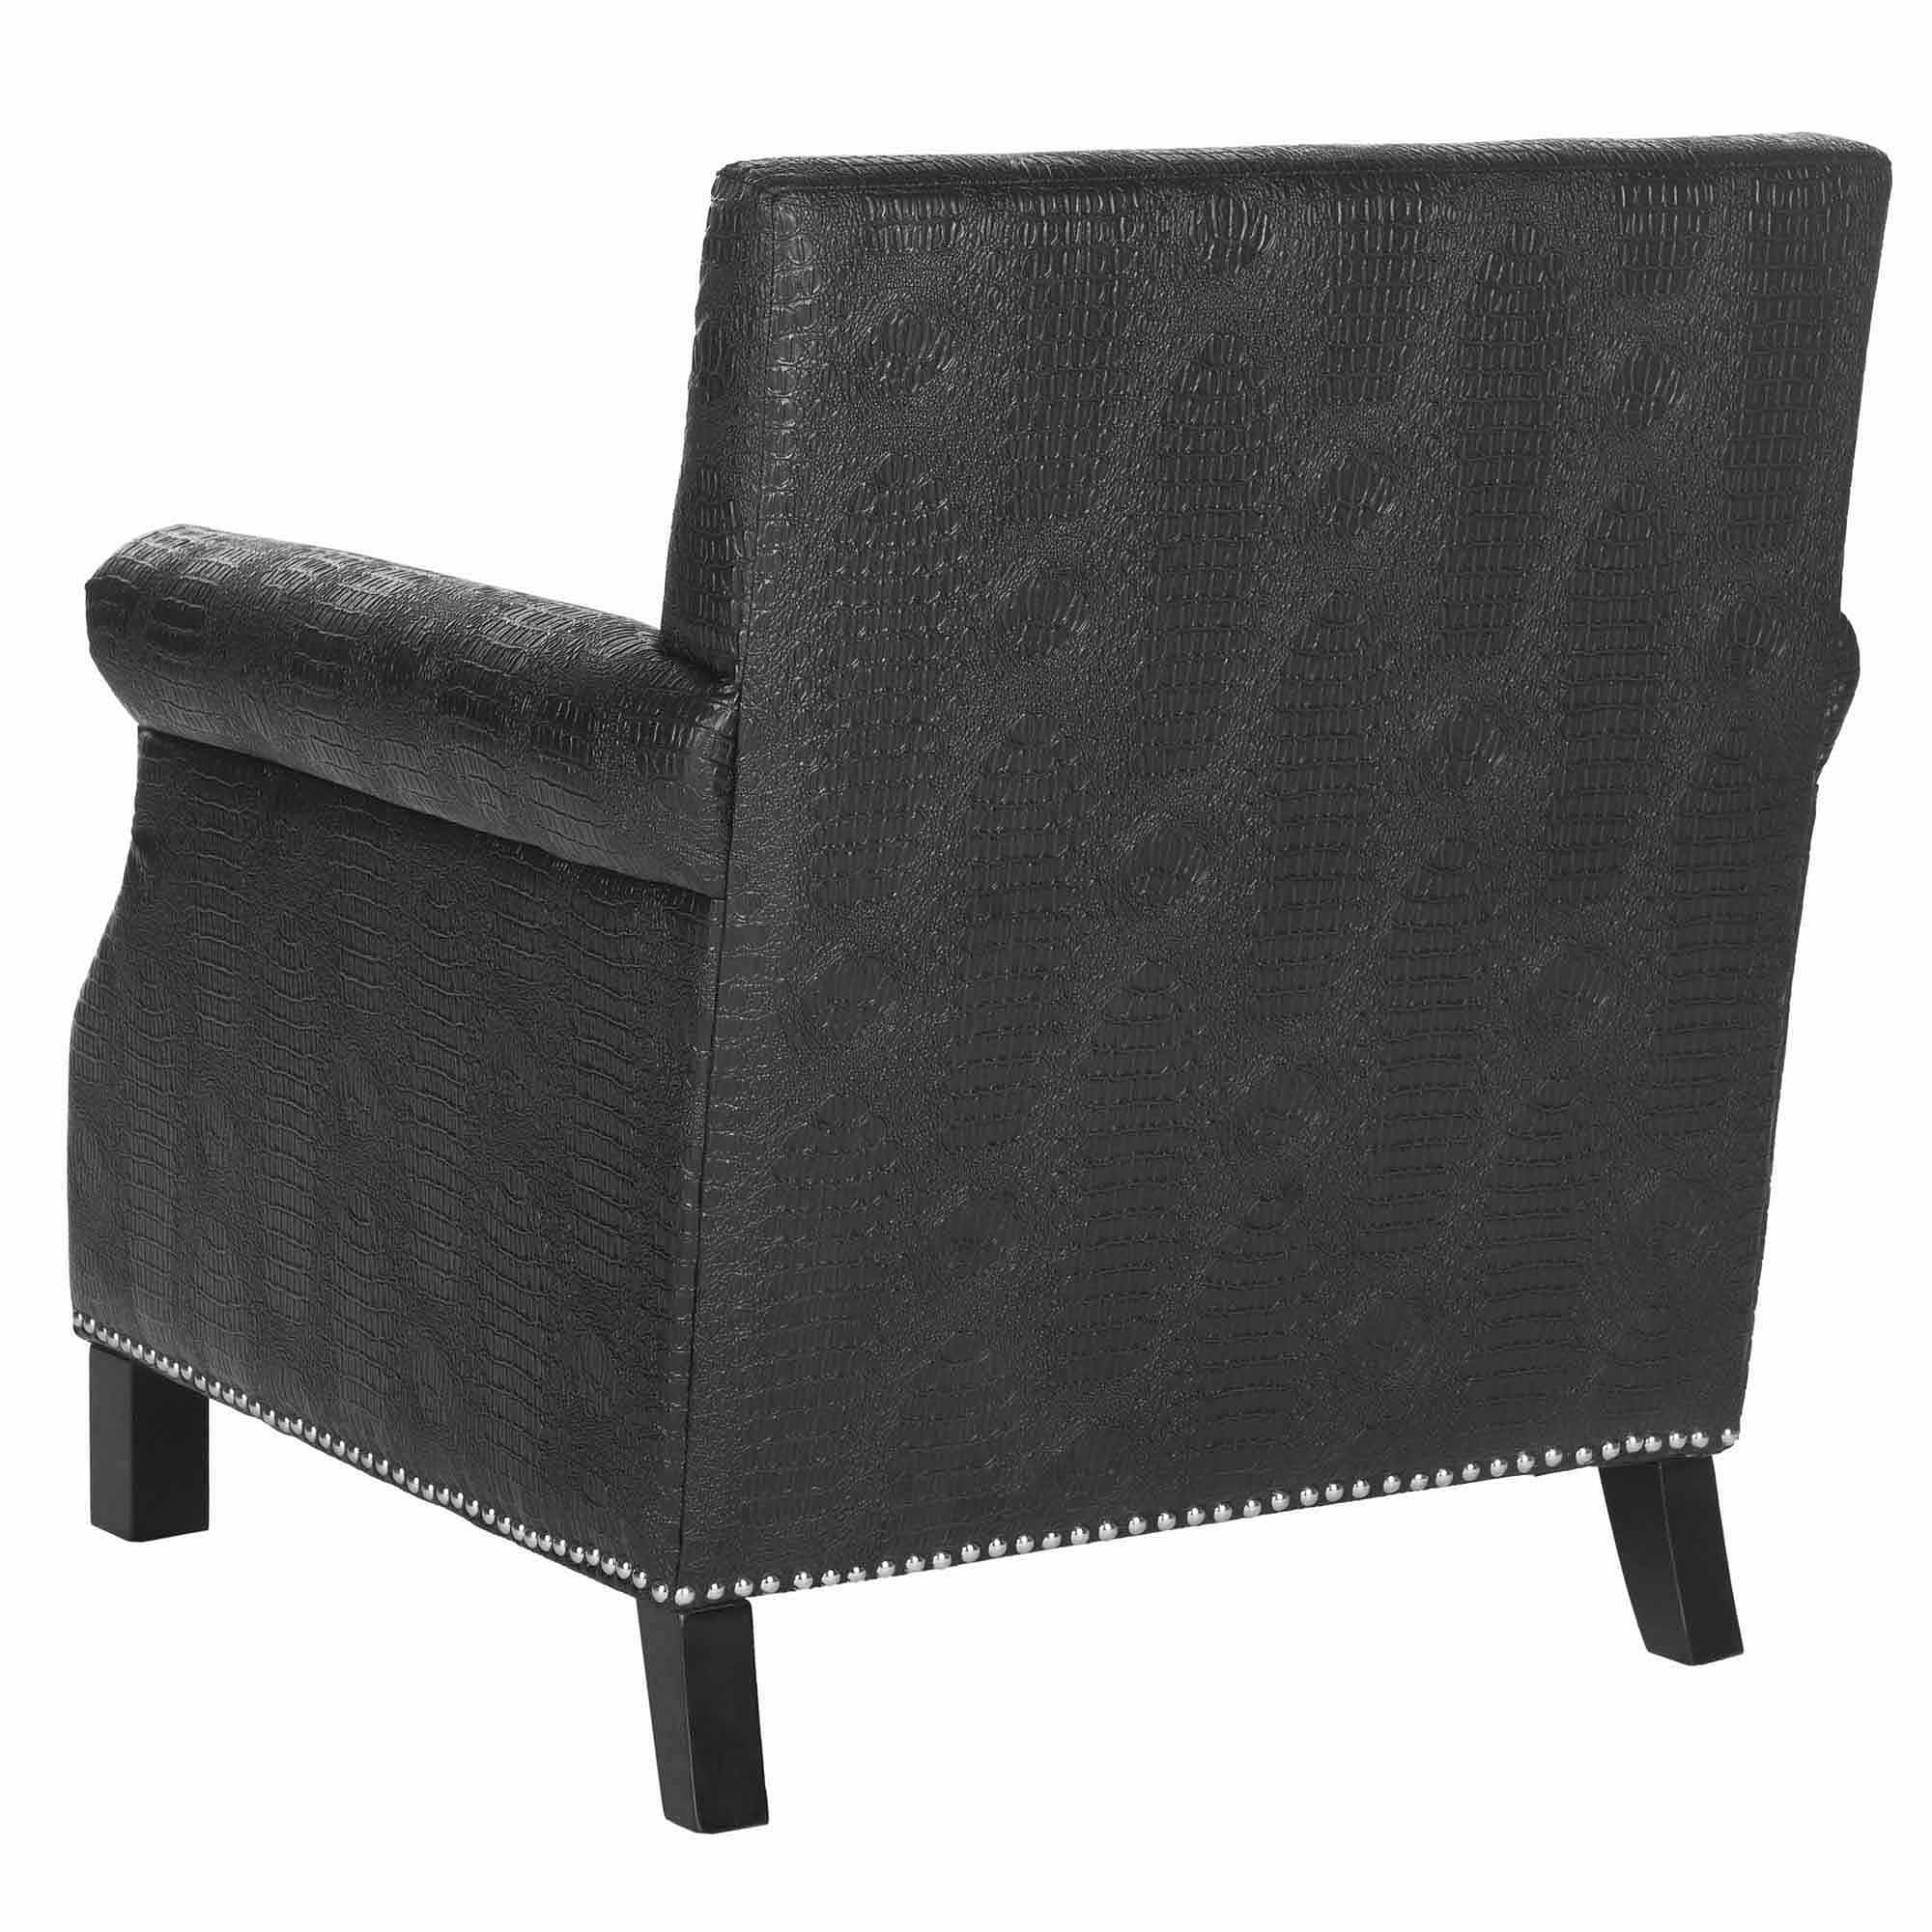 SAFAVIEH Easton Rustic Glam Upholstered Club Chair w/ Nailheads, Black Crocodile - image 4 of 4